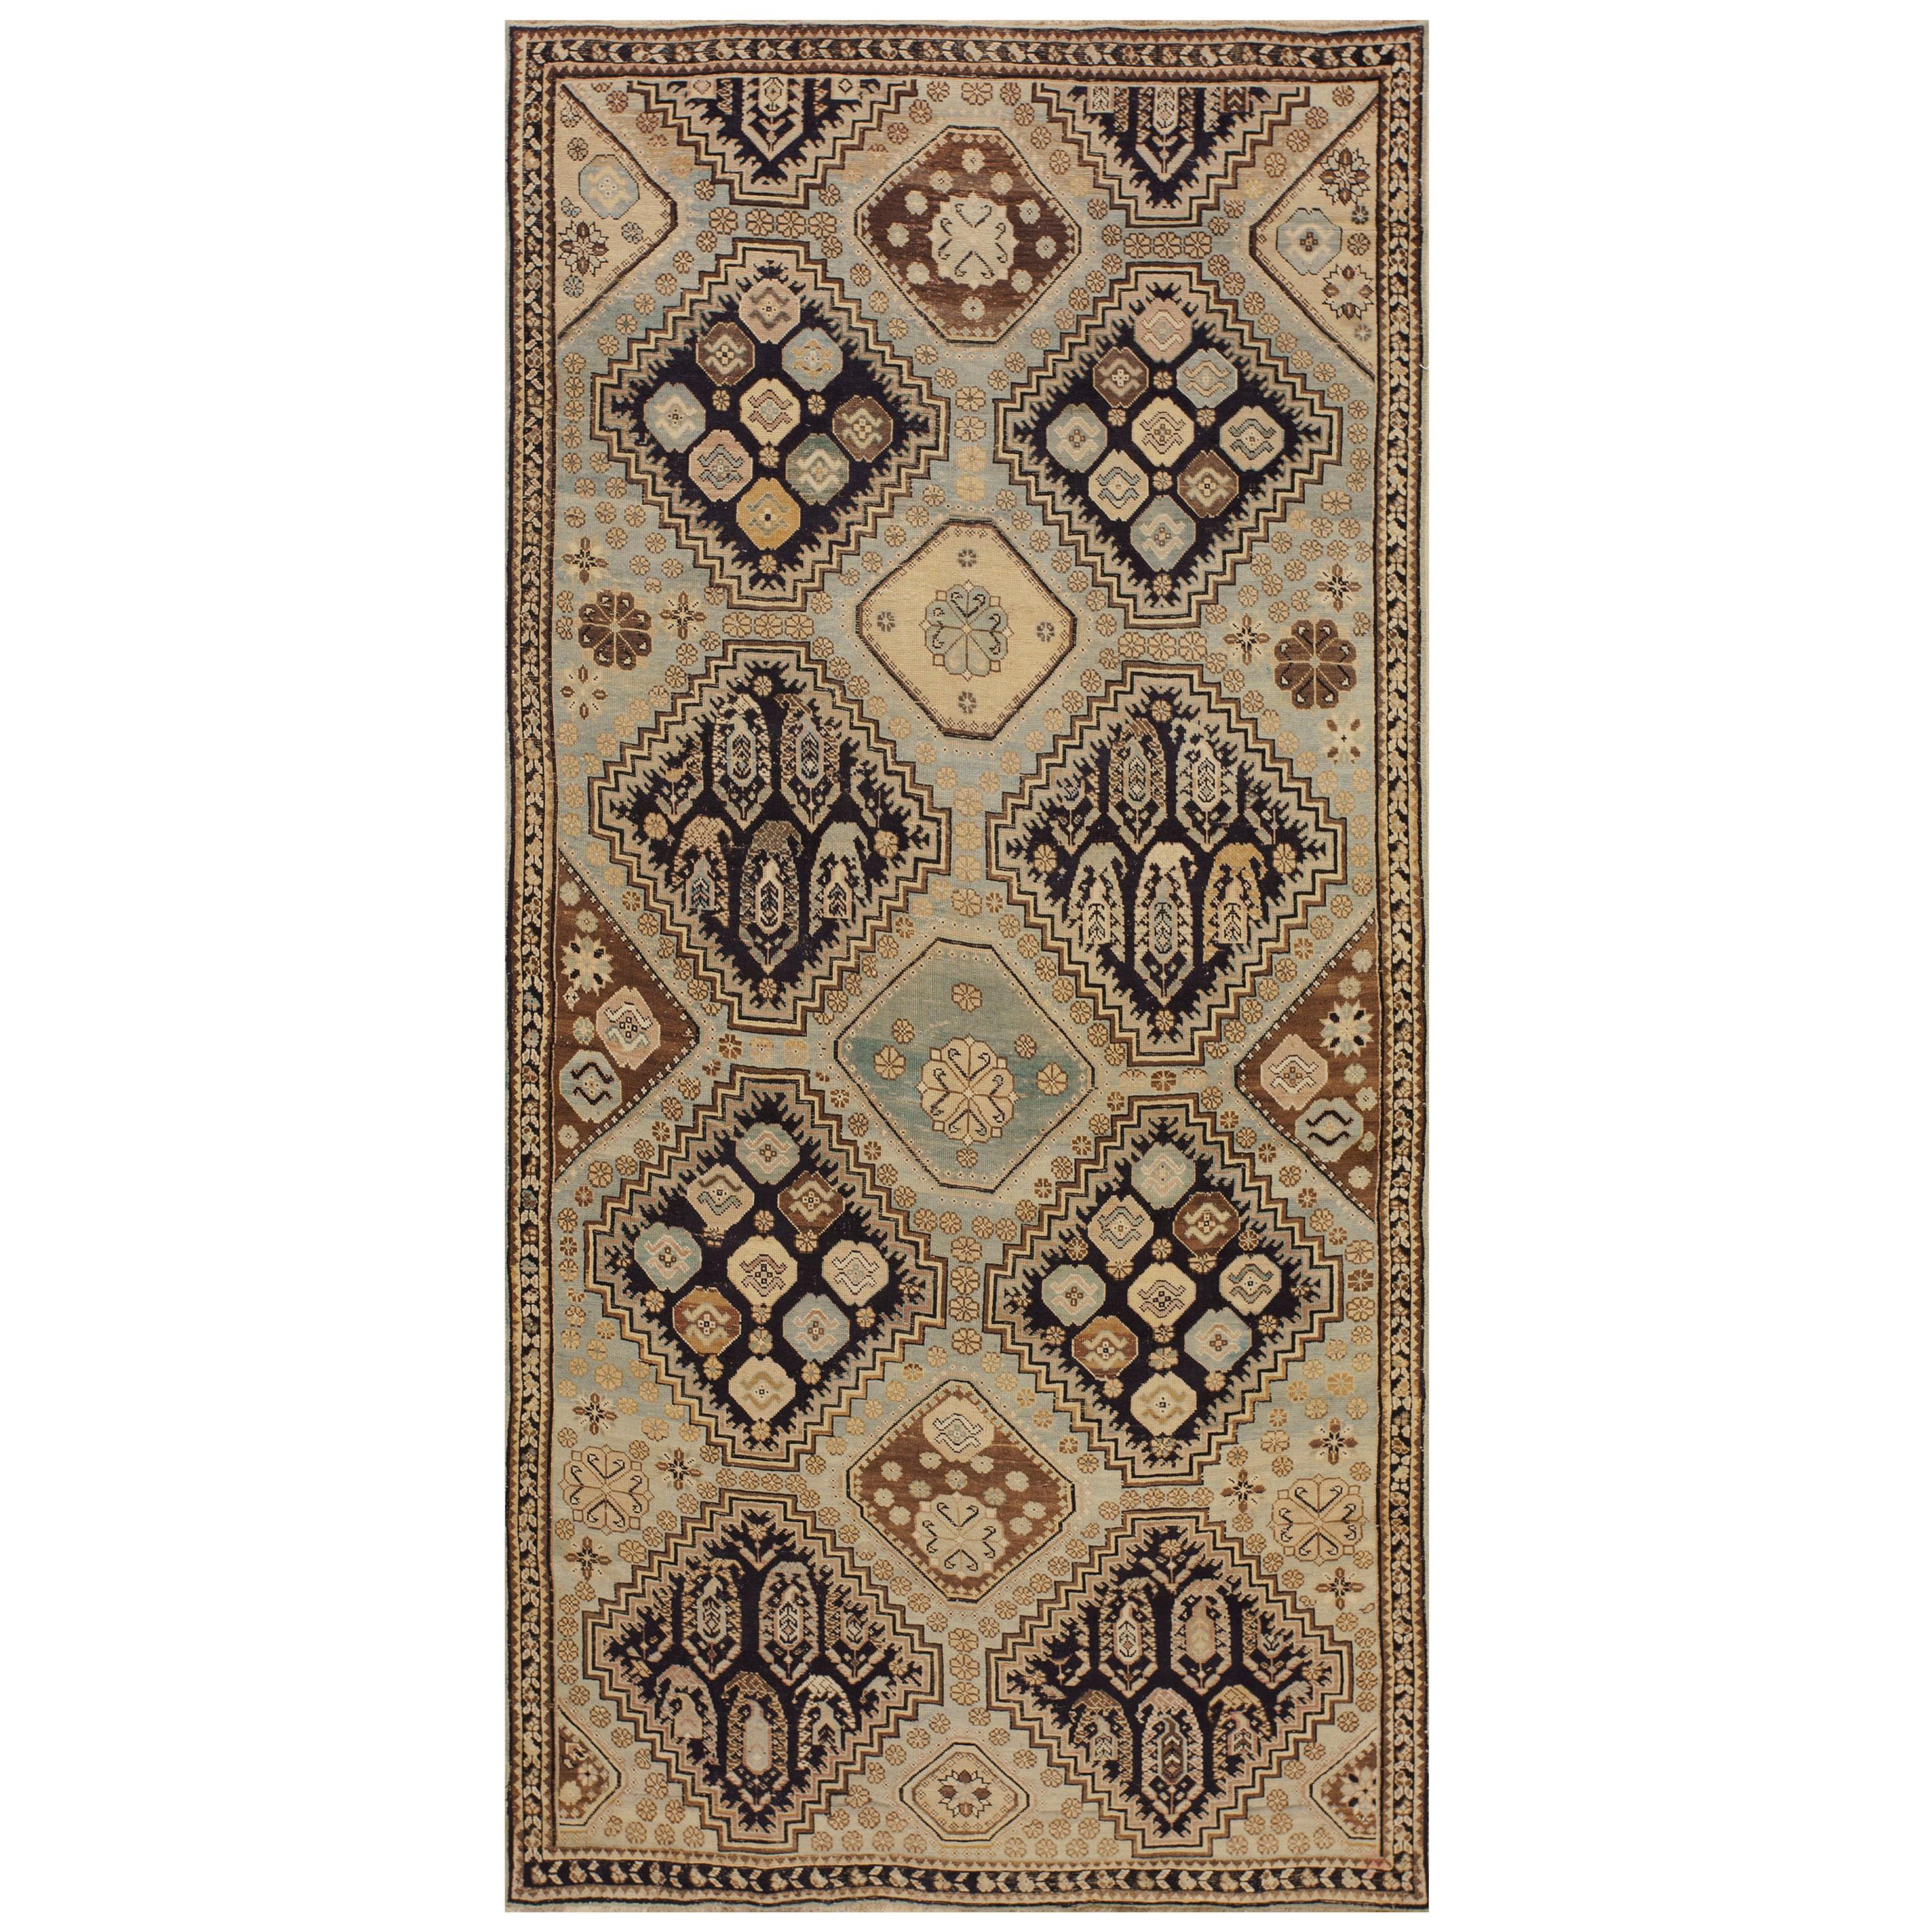 19th Century Caucasian Baku Carpet ( 4'4" x 8'8" - 133 x 265 cm )  For Sale